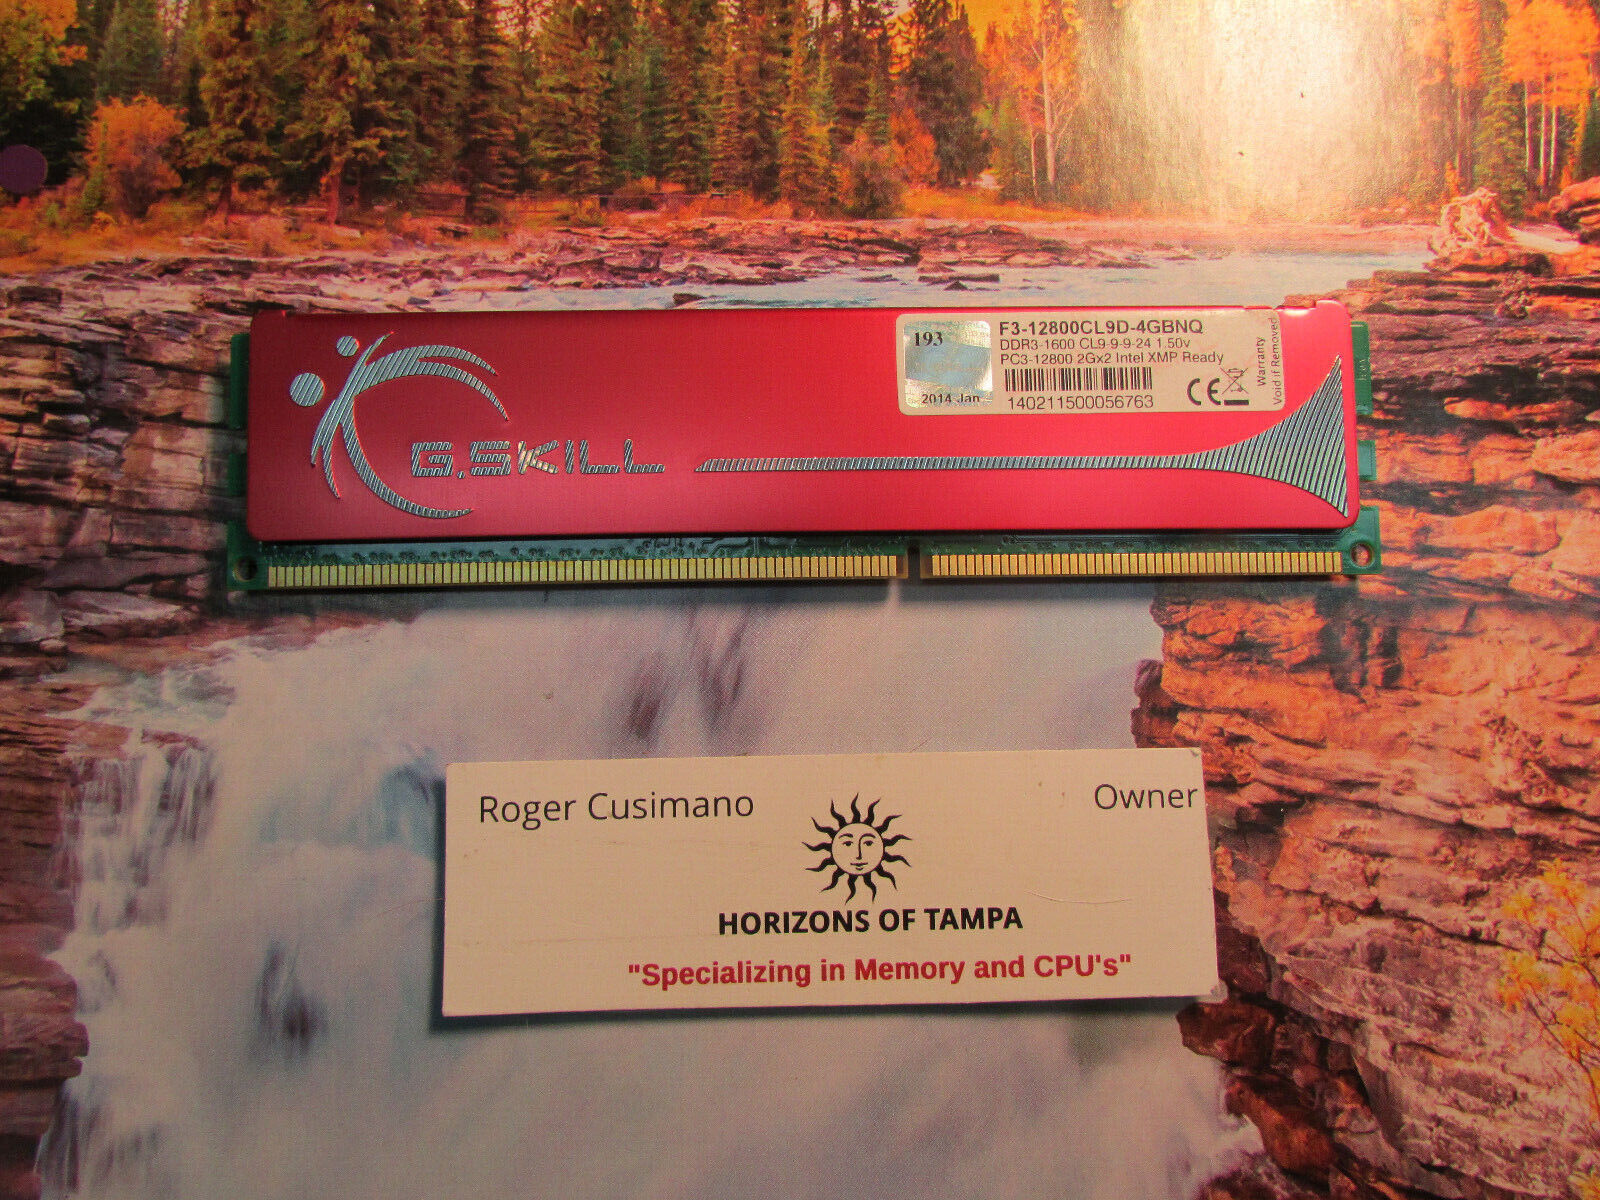 2GB G. SKILL F3-12800CL9D-4GBNQ DDR3 DESKTOP RAM MEMORY - SINGLE